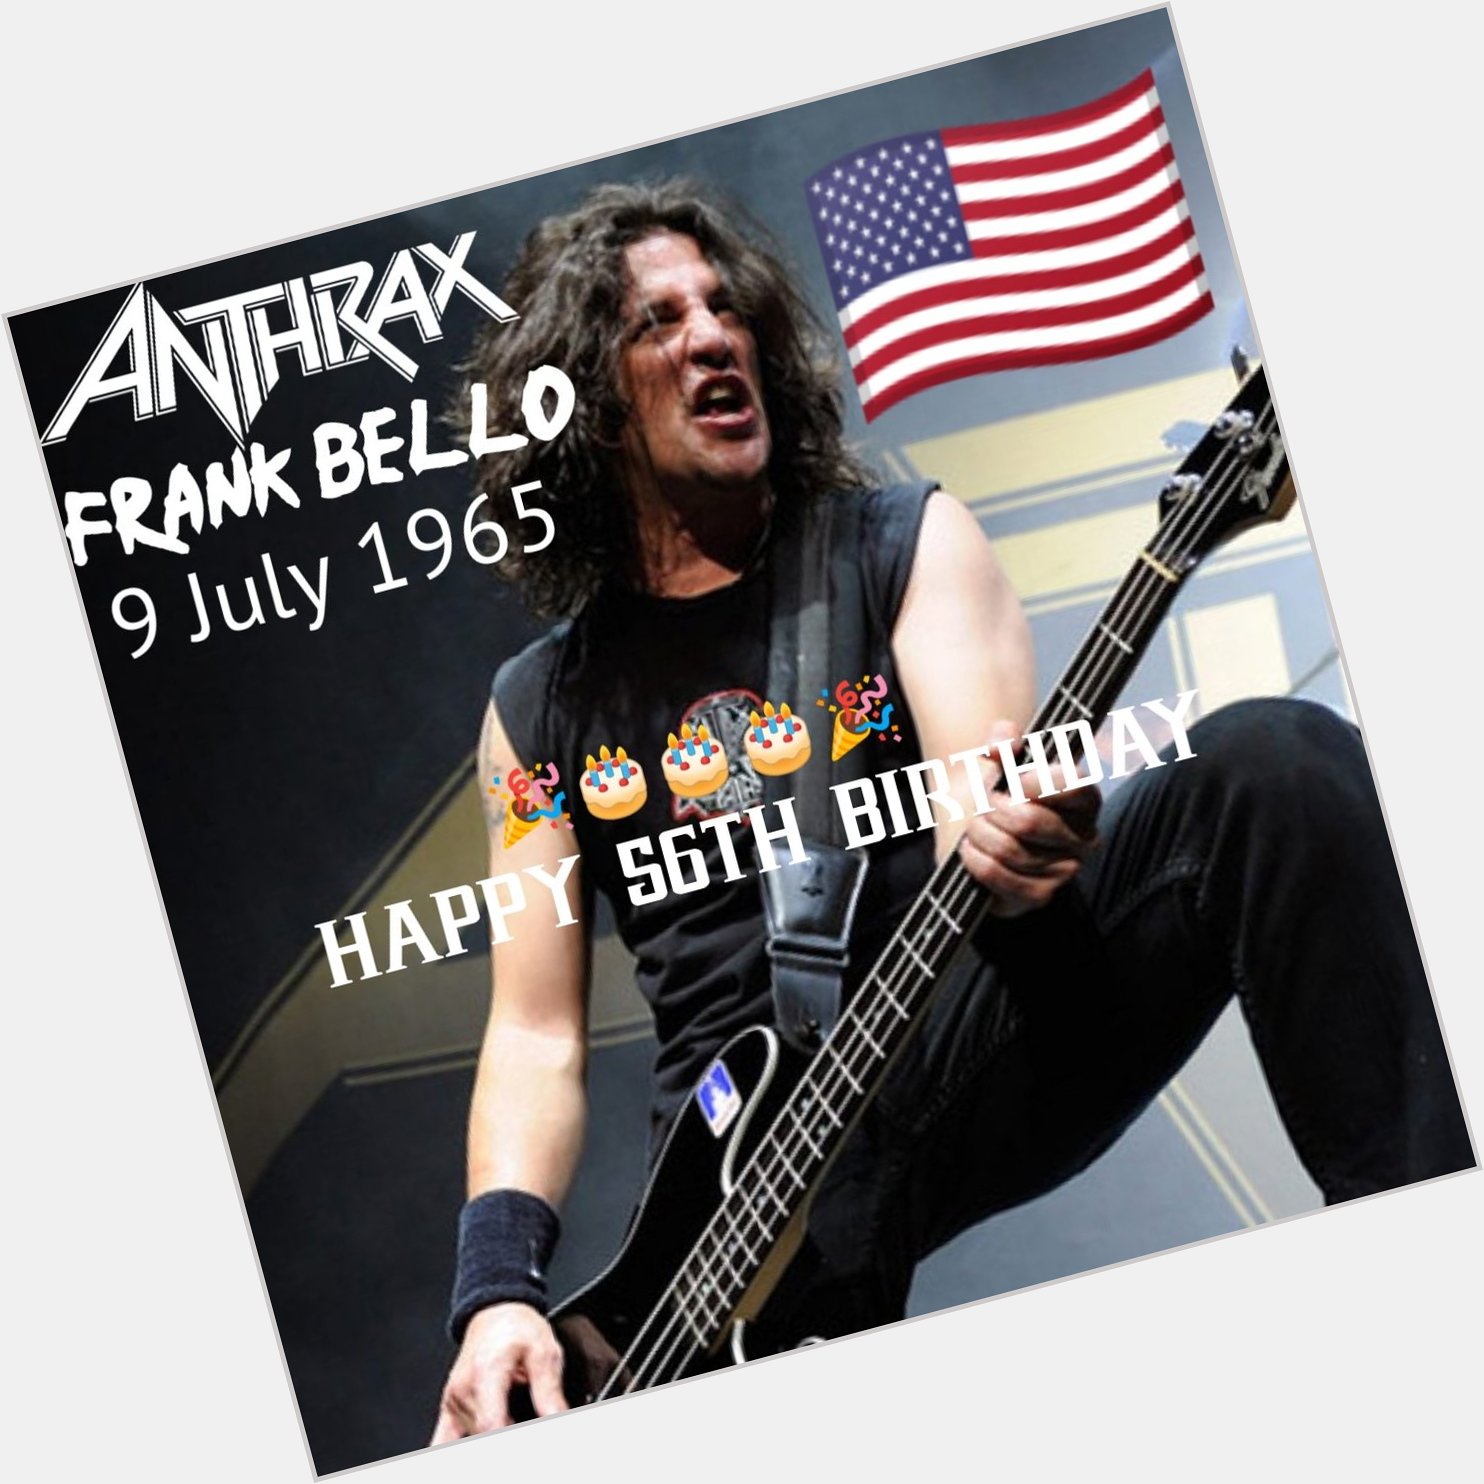   Happy Birthday Bassist Anthrax,Frank Bello     